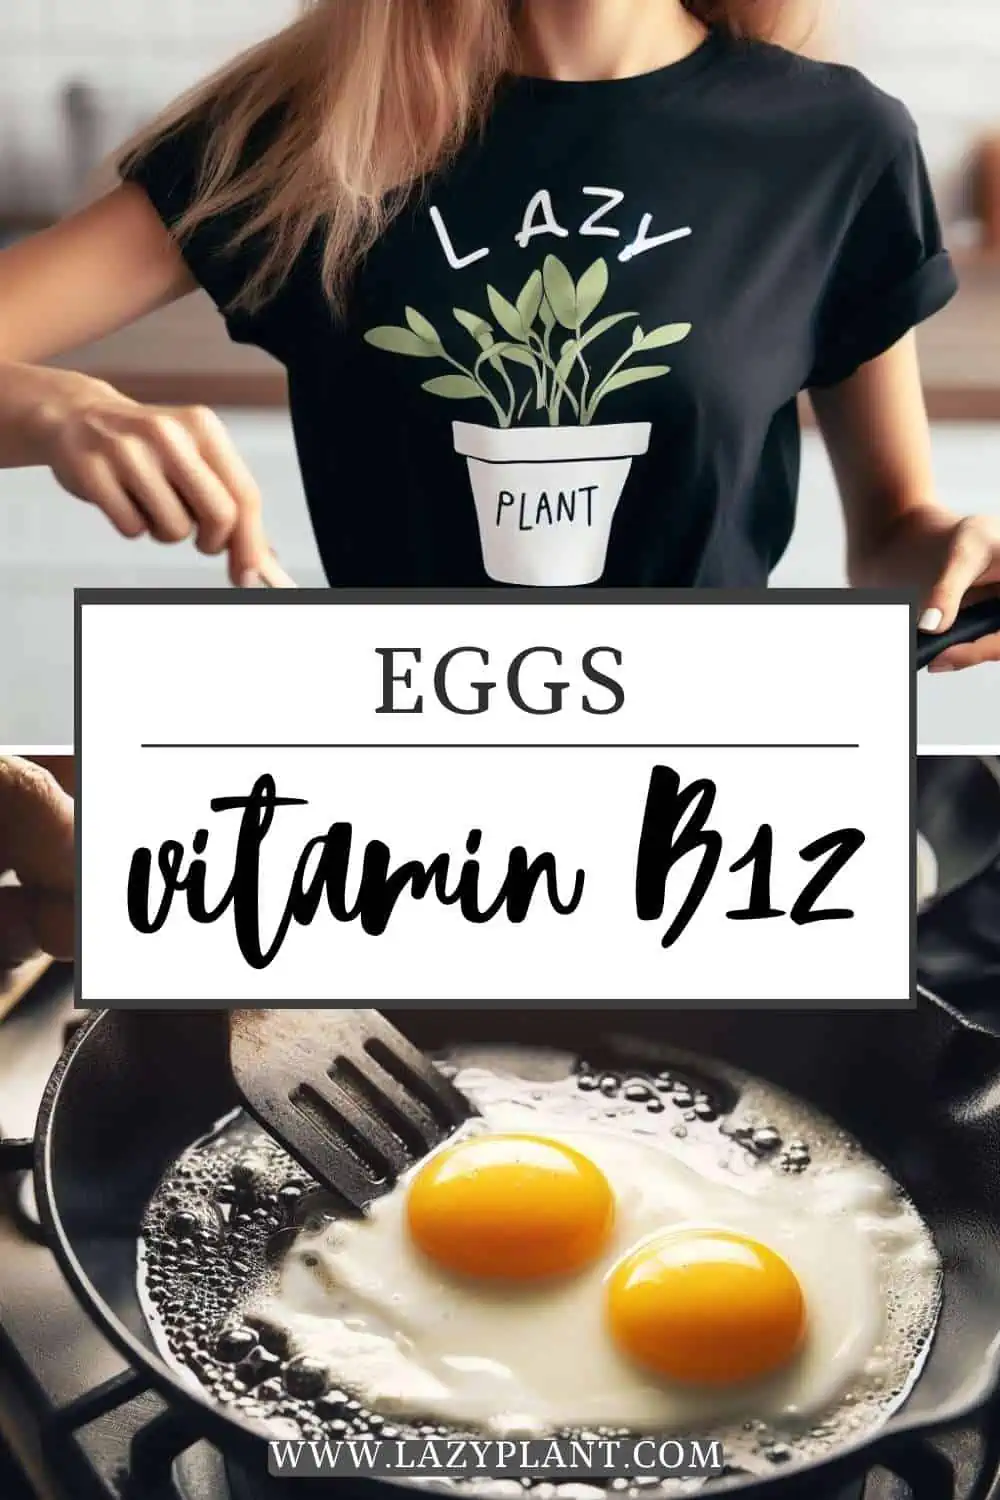 Add Eggs to recipes for Vitamin B12.